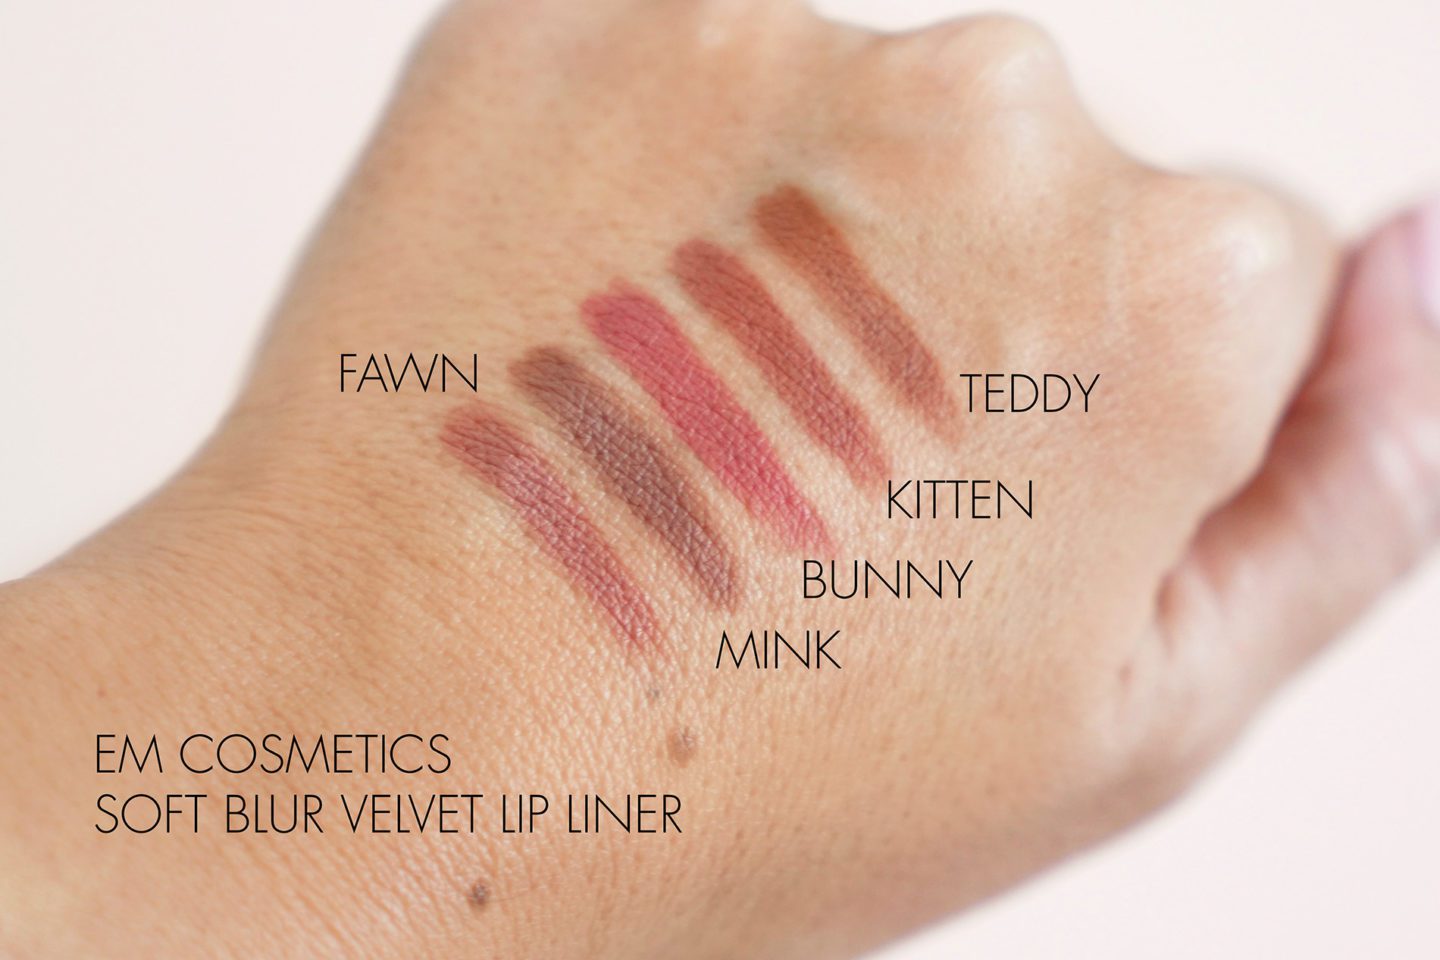 EM Cosmetics Soft Blur Velvet Lip Liner swatches